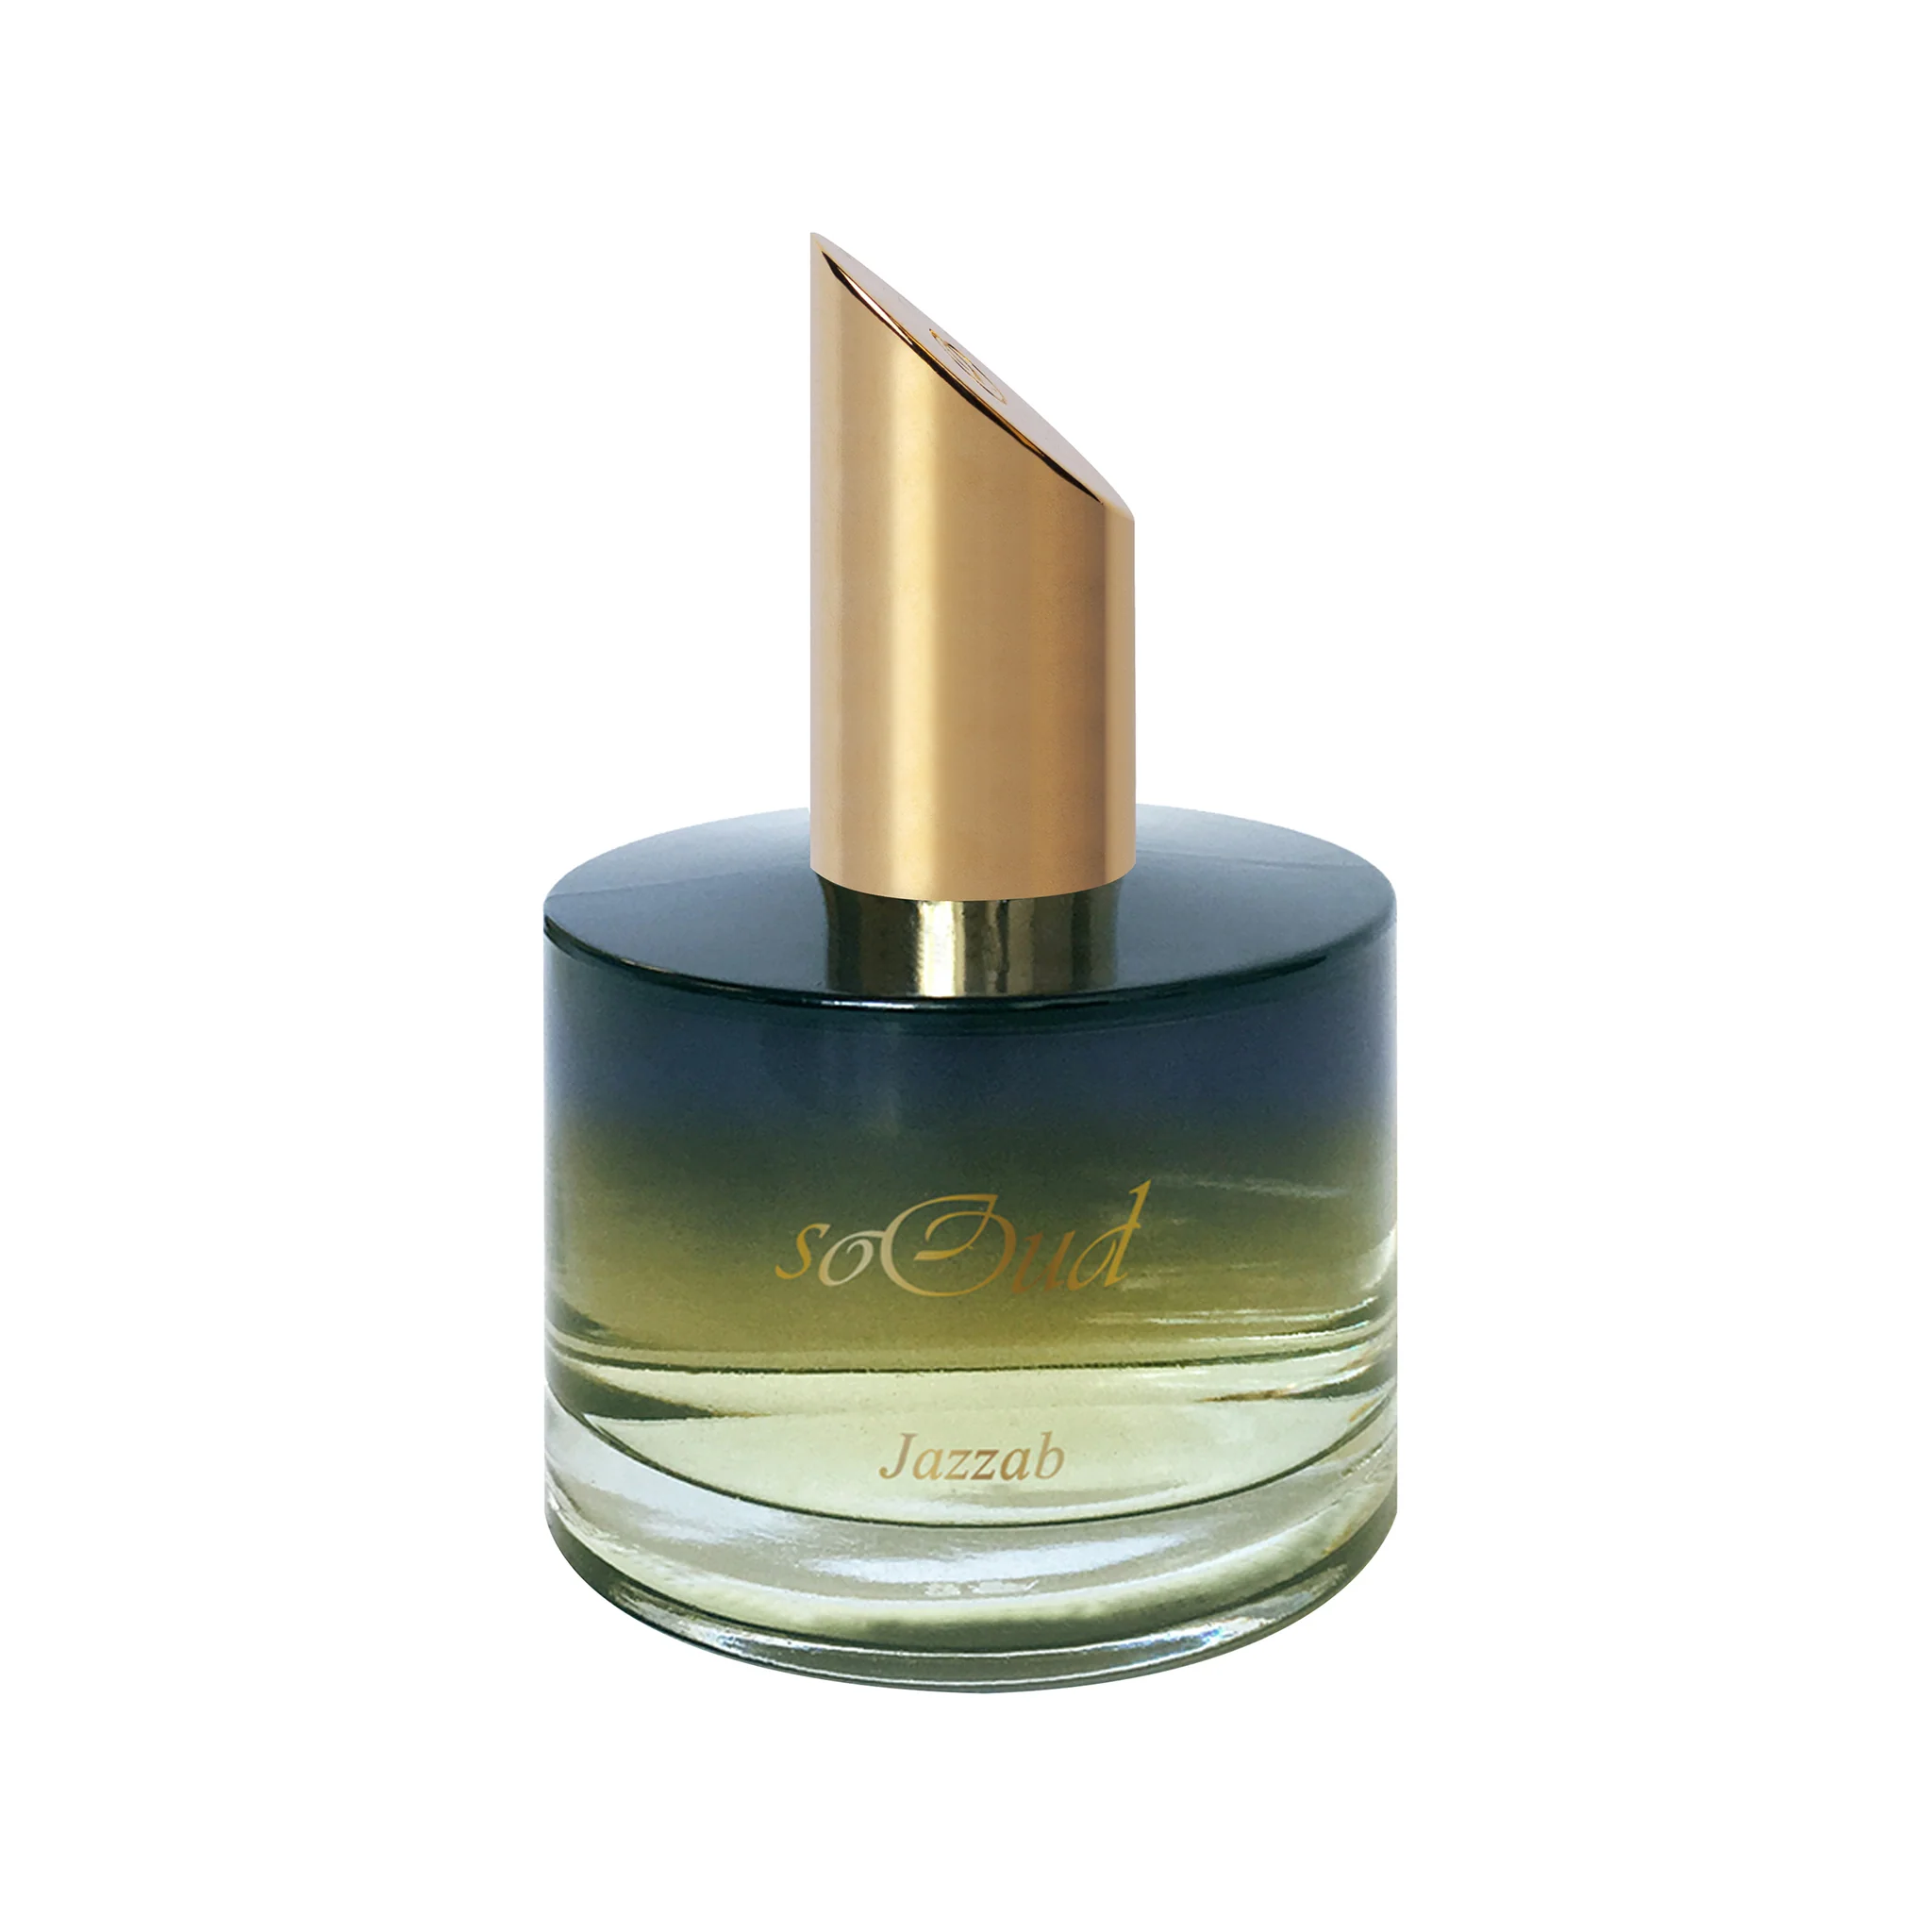 SOOUD_JAZZAB_Eau_Fine_perfume_fragrance_luxury_niche_100ml_1024x1024@2x.webp